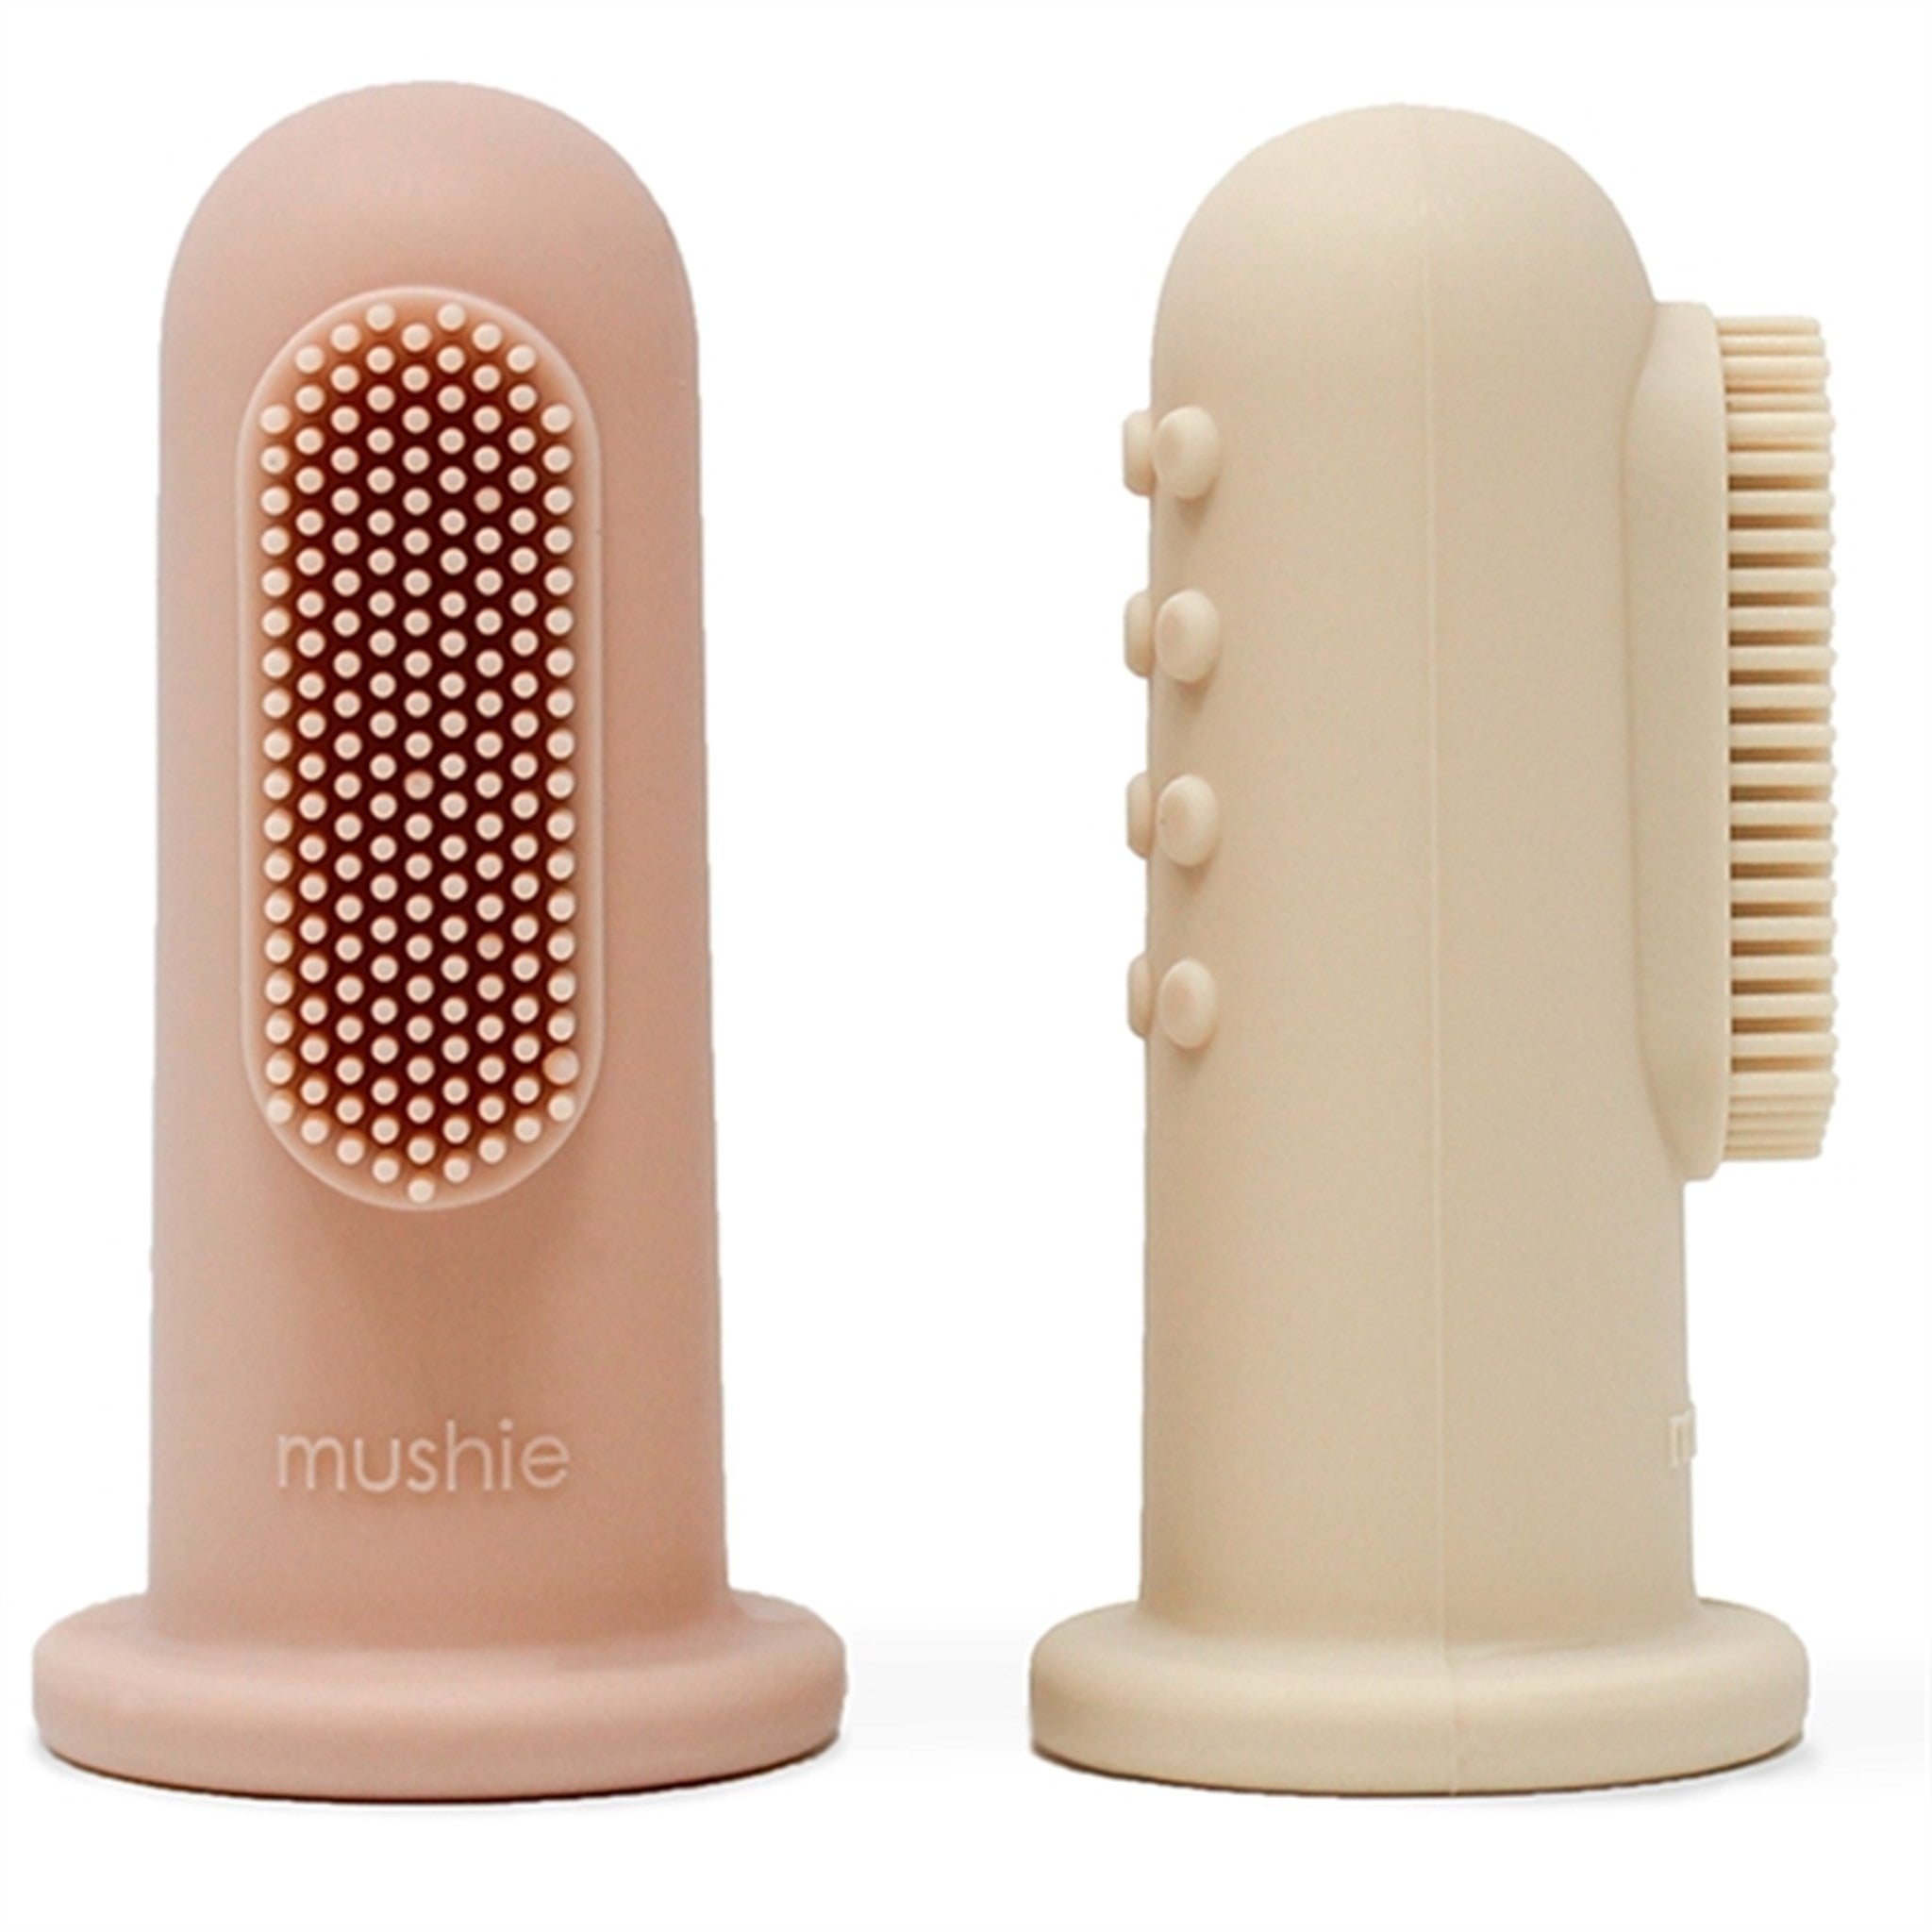 Mushie 指套牙刷 2 包装，颜色为蜜桃粉和流沙